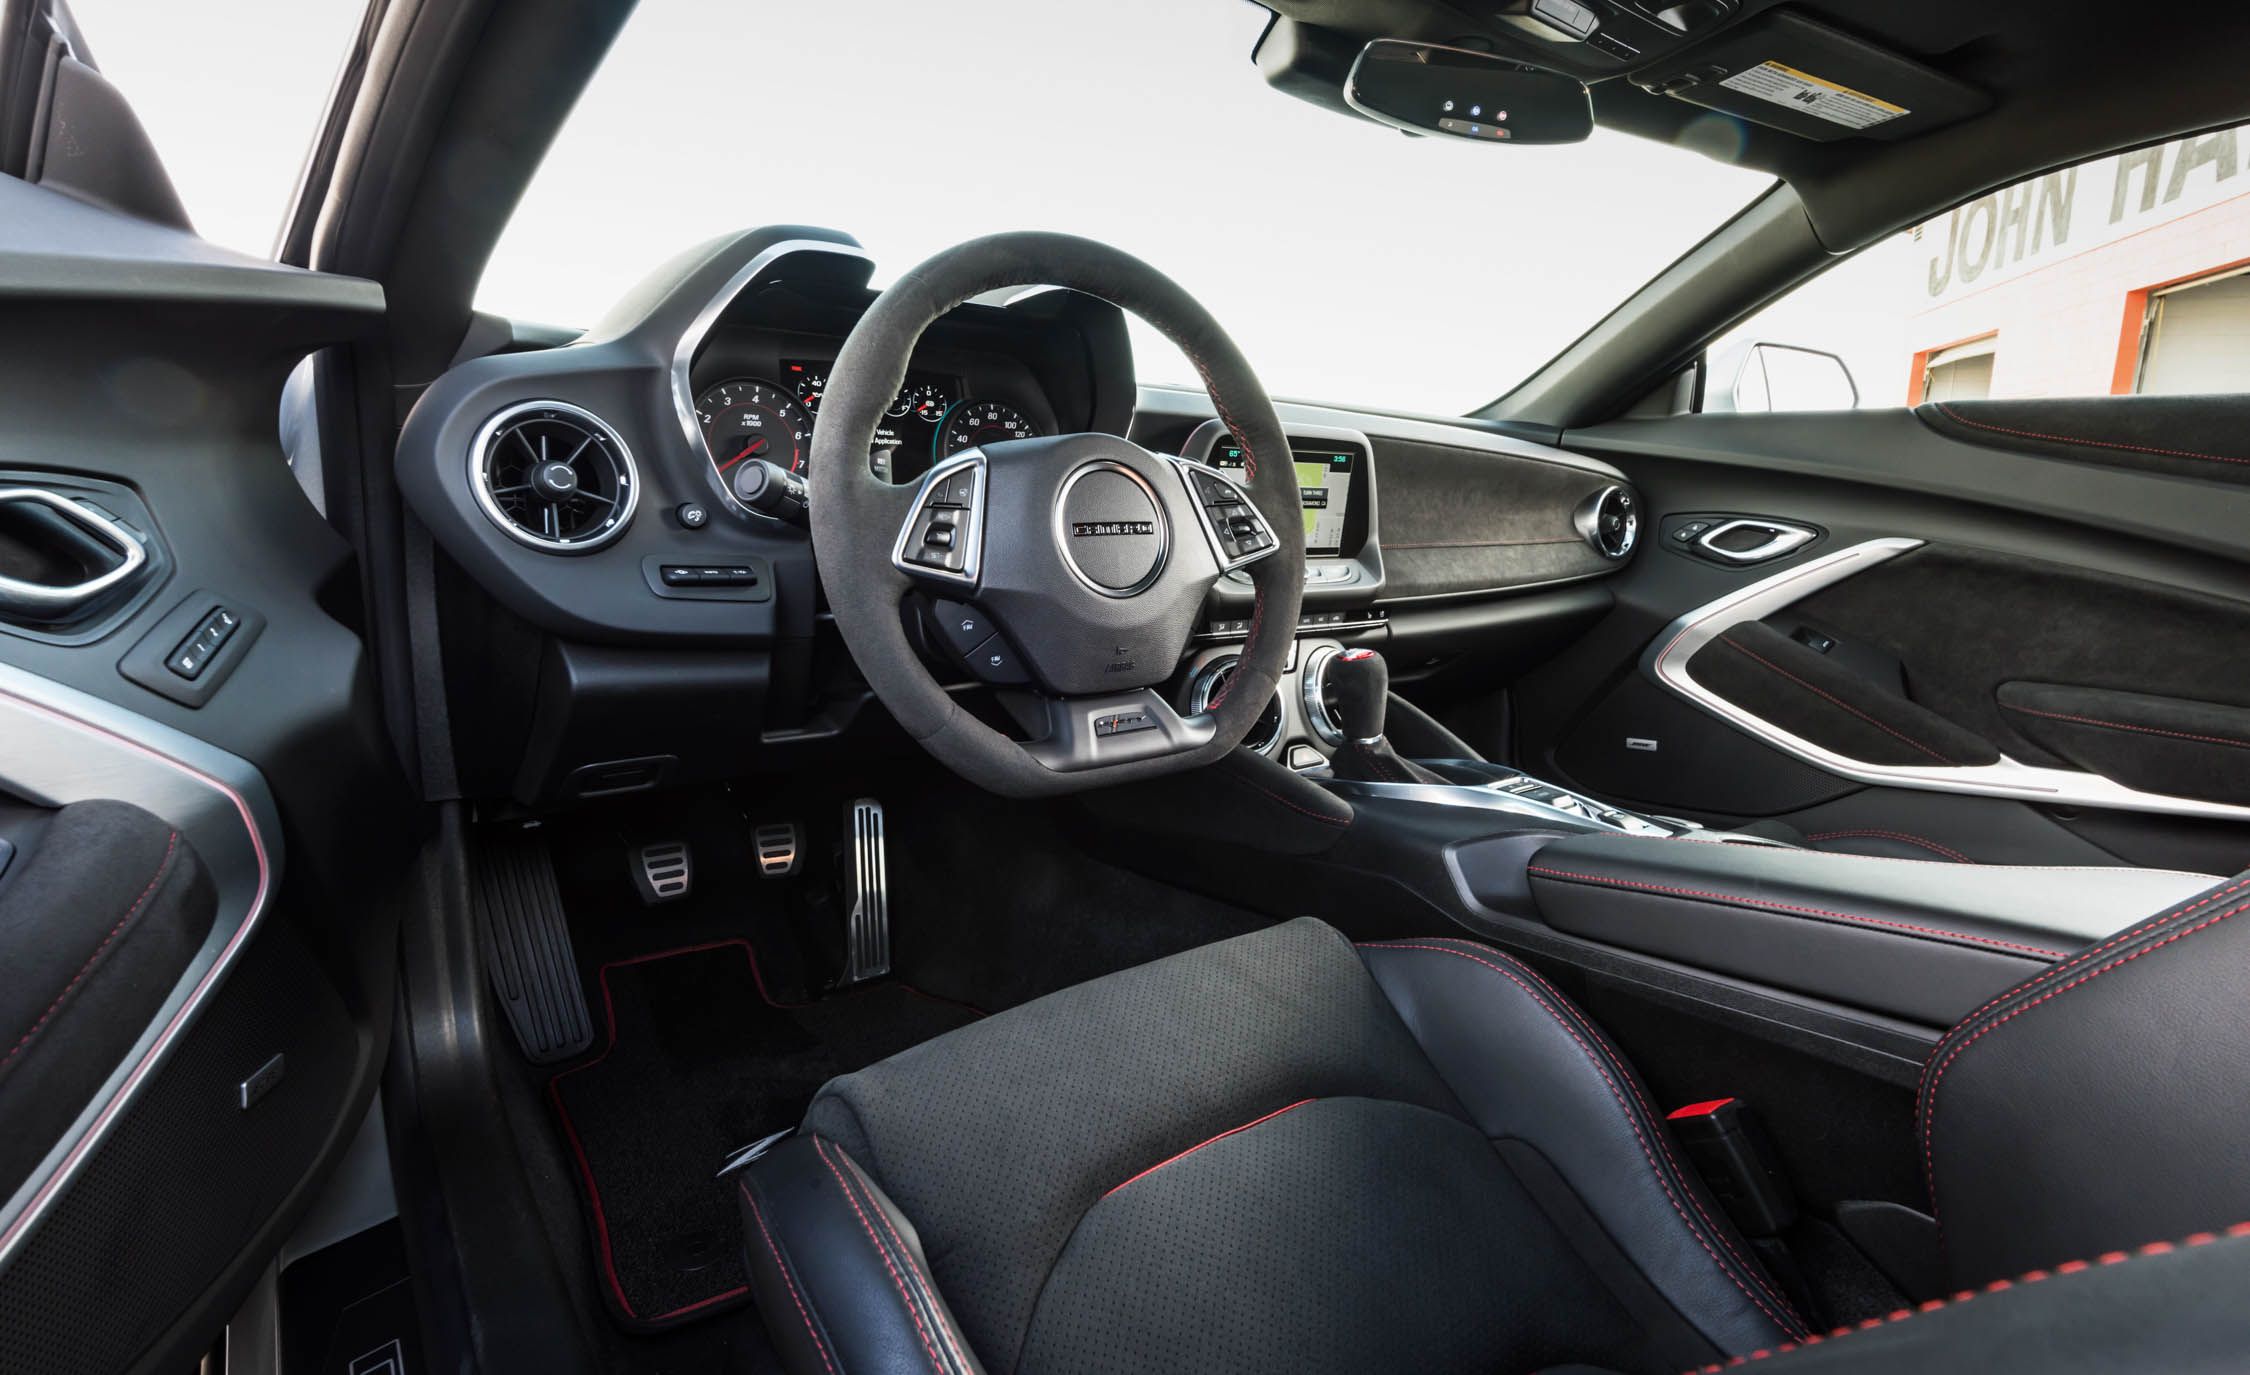 2017 Chevrolet Camaro ZL1 Interior Cockpit Steering And Dash (View 31 of 62)